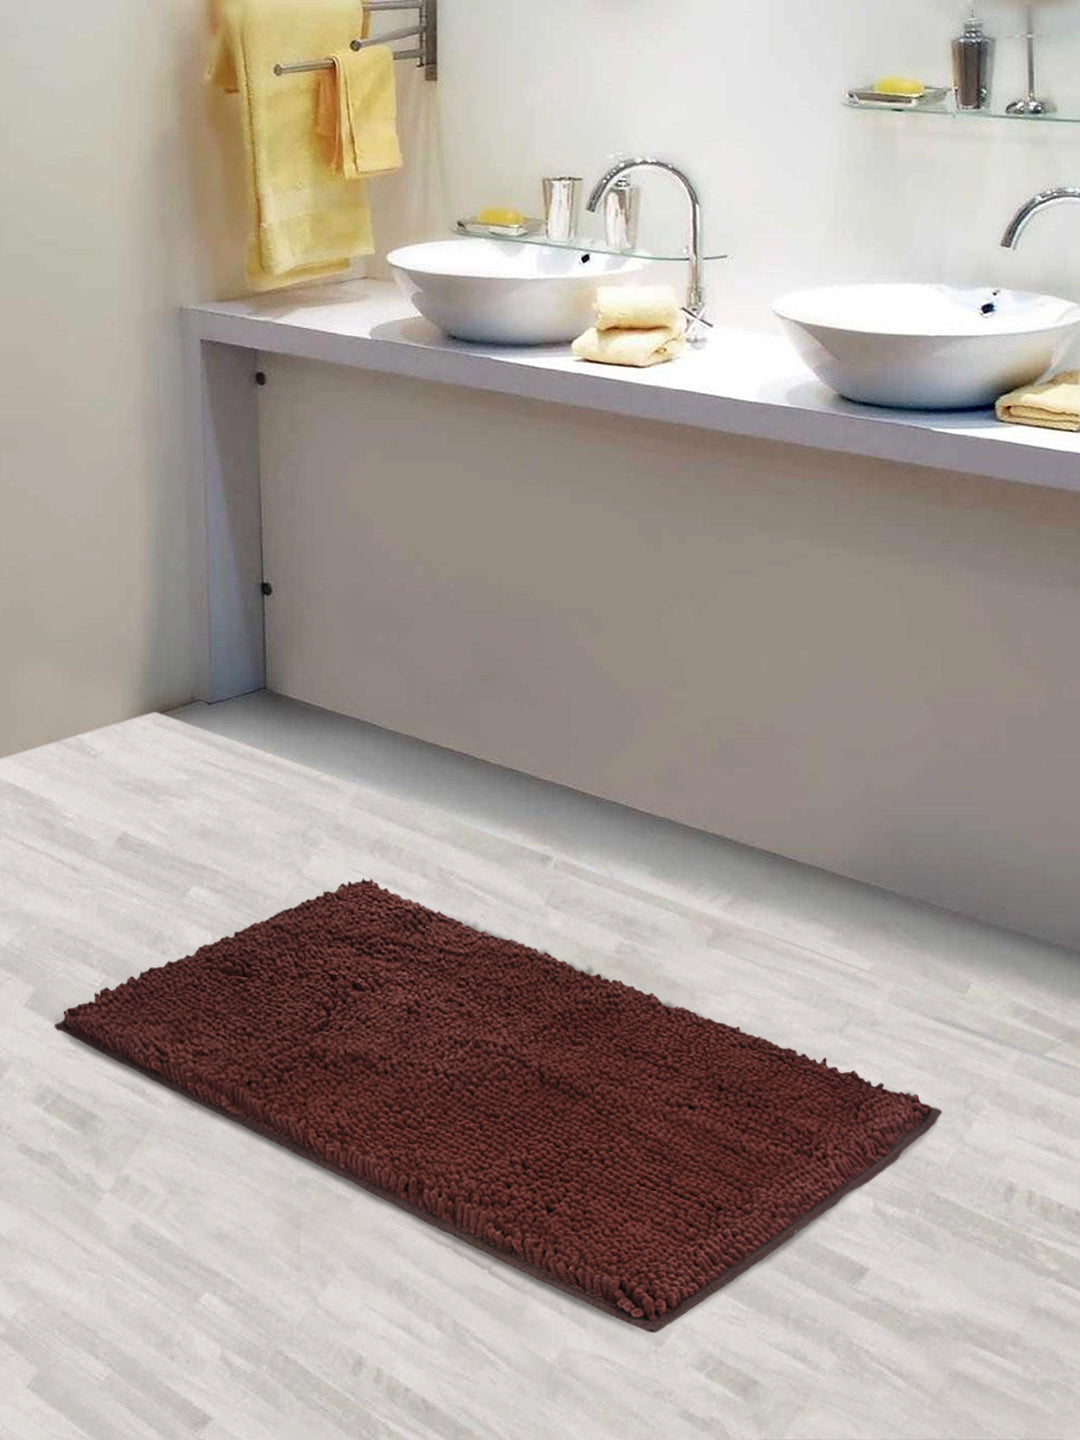 Lushomes Bathroom Mat, 2200 GSM Floor, bath mat Mat with High Pile Microfiber, anti skid mat for bathroom Floor, bath mat Non Slip Anti Slip, Premium Quality (12 x 18 Inch, Single Pc, Dark Brown)